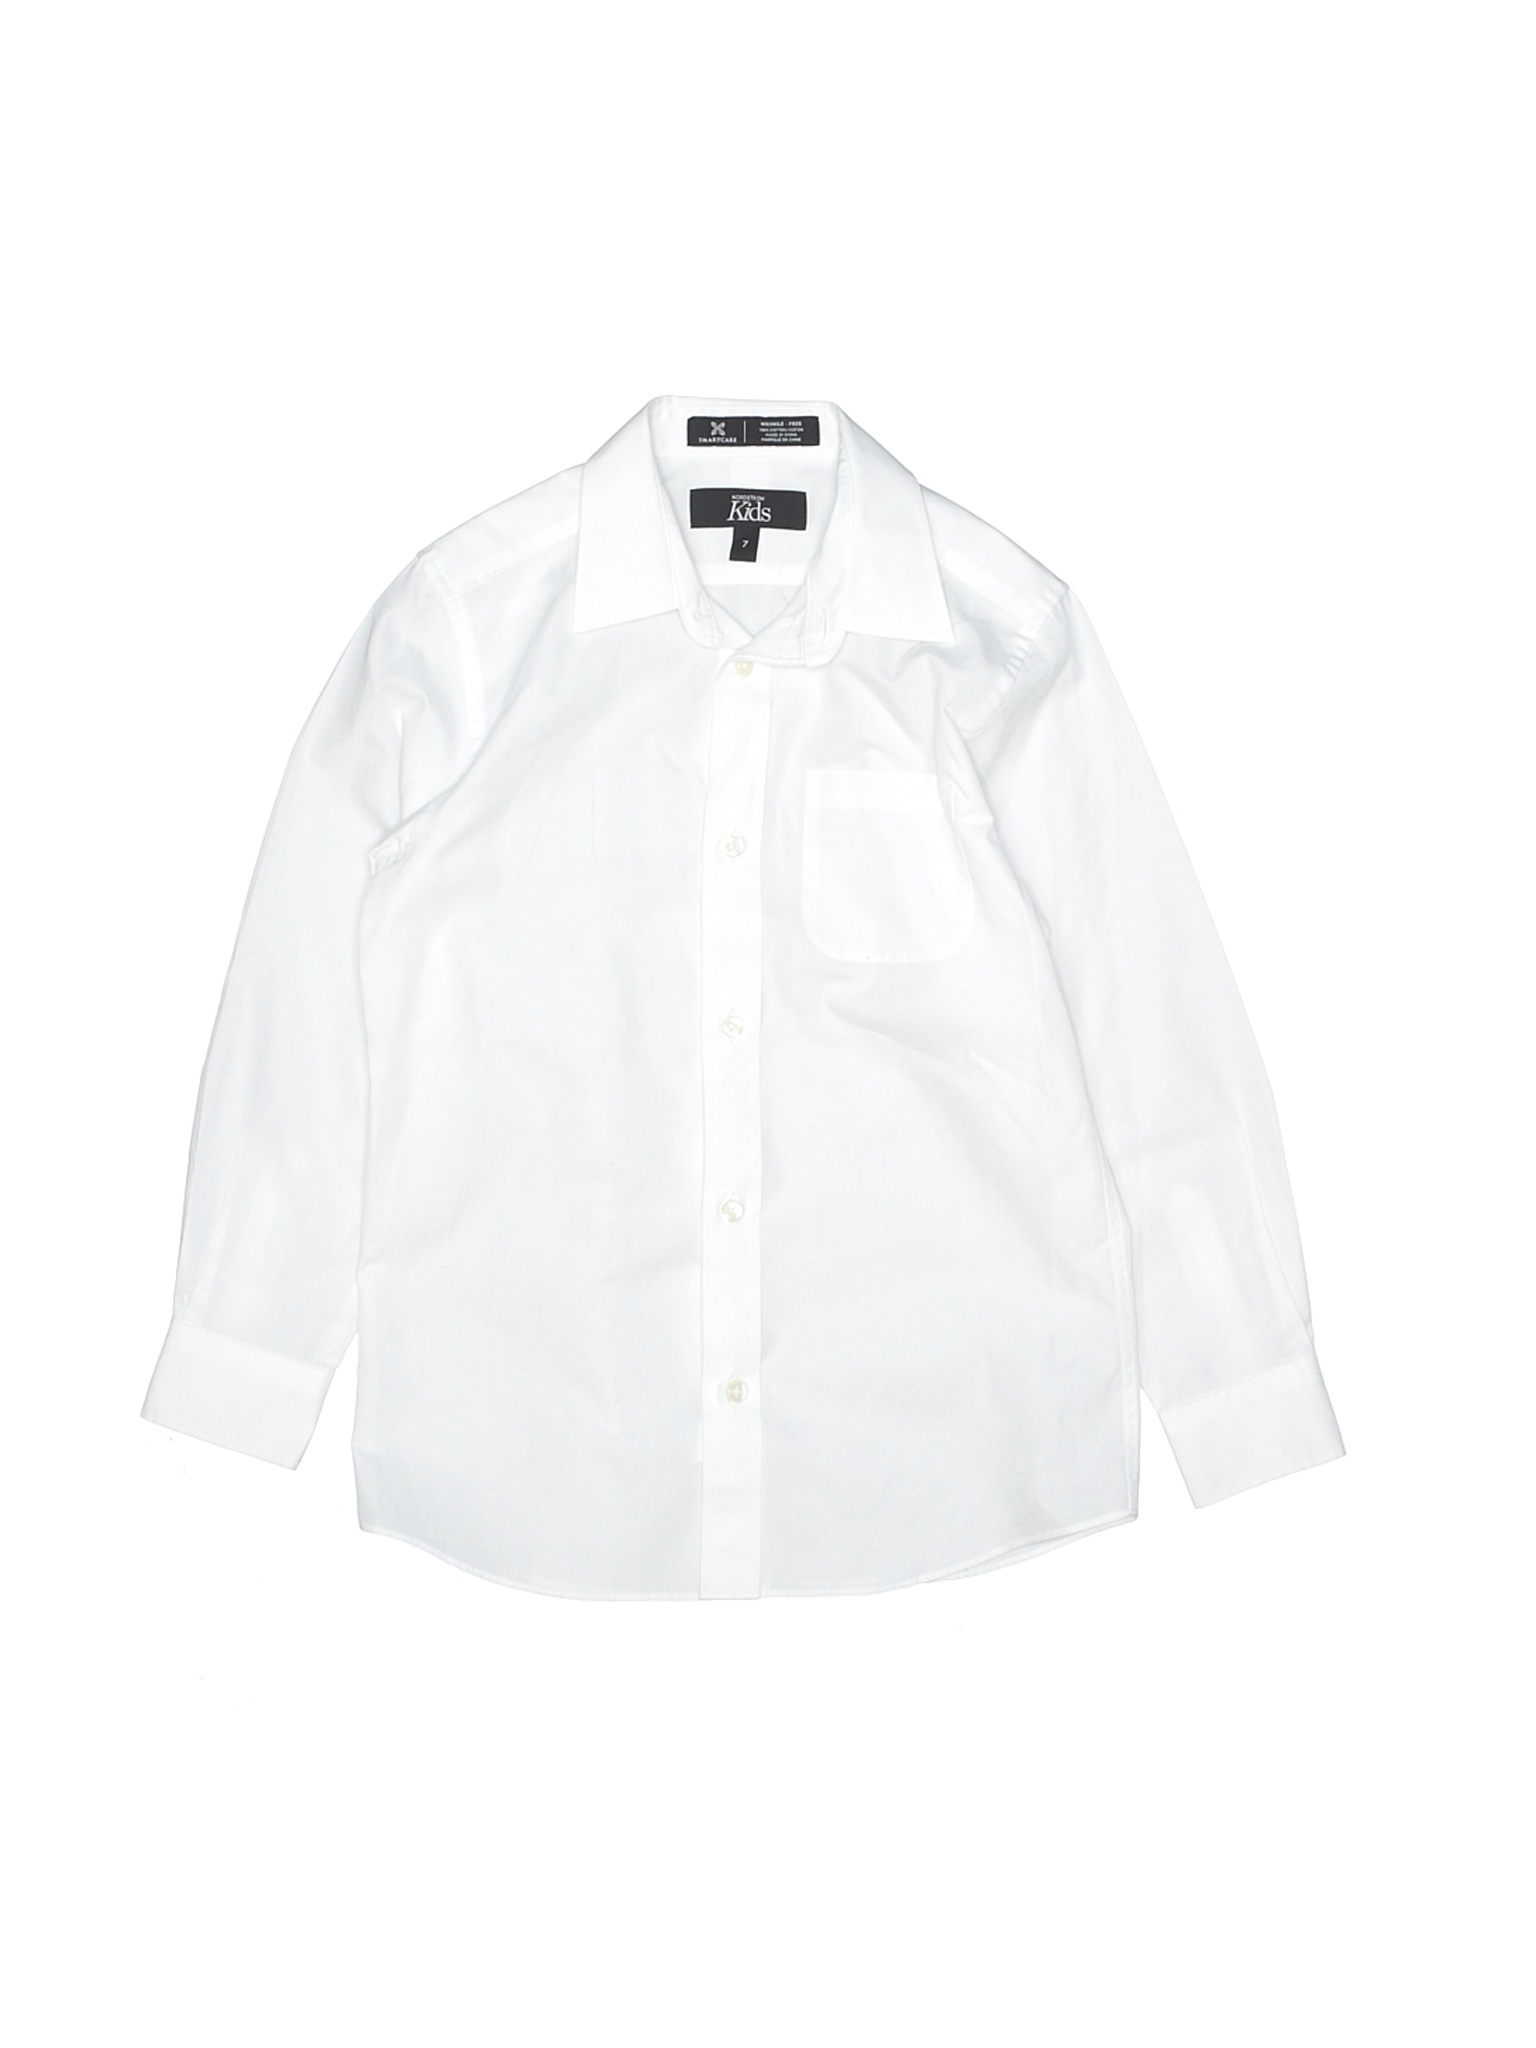 Nordstrom Boys White Long Sleeve Button-Down Shirt 7 | eBay